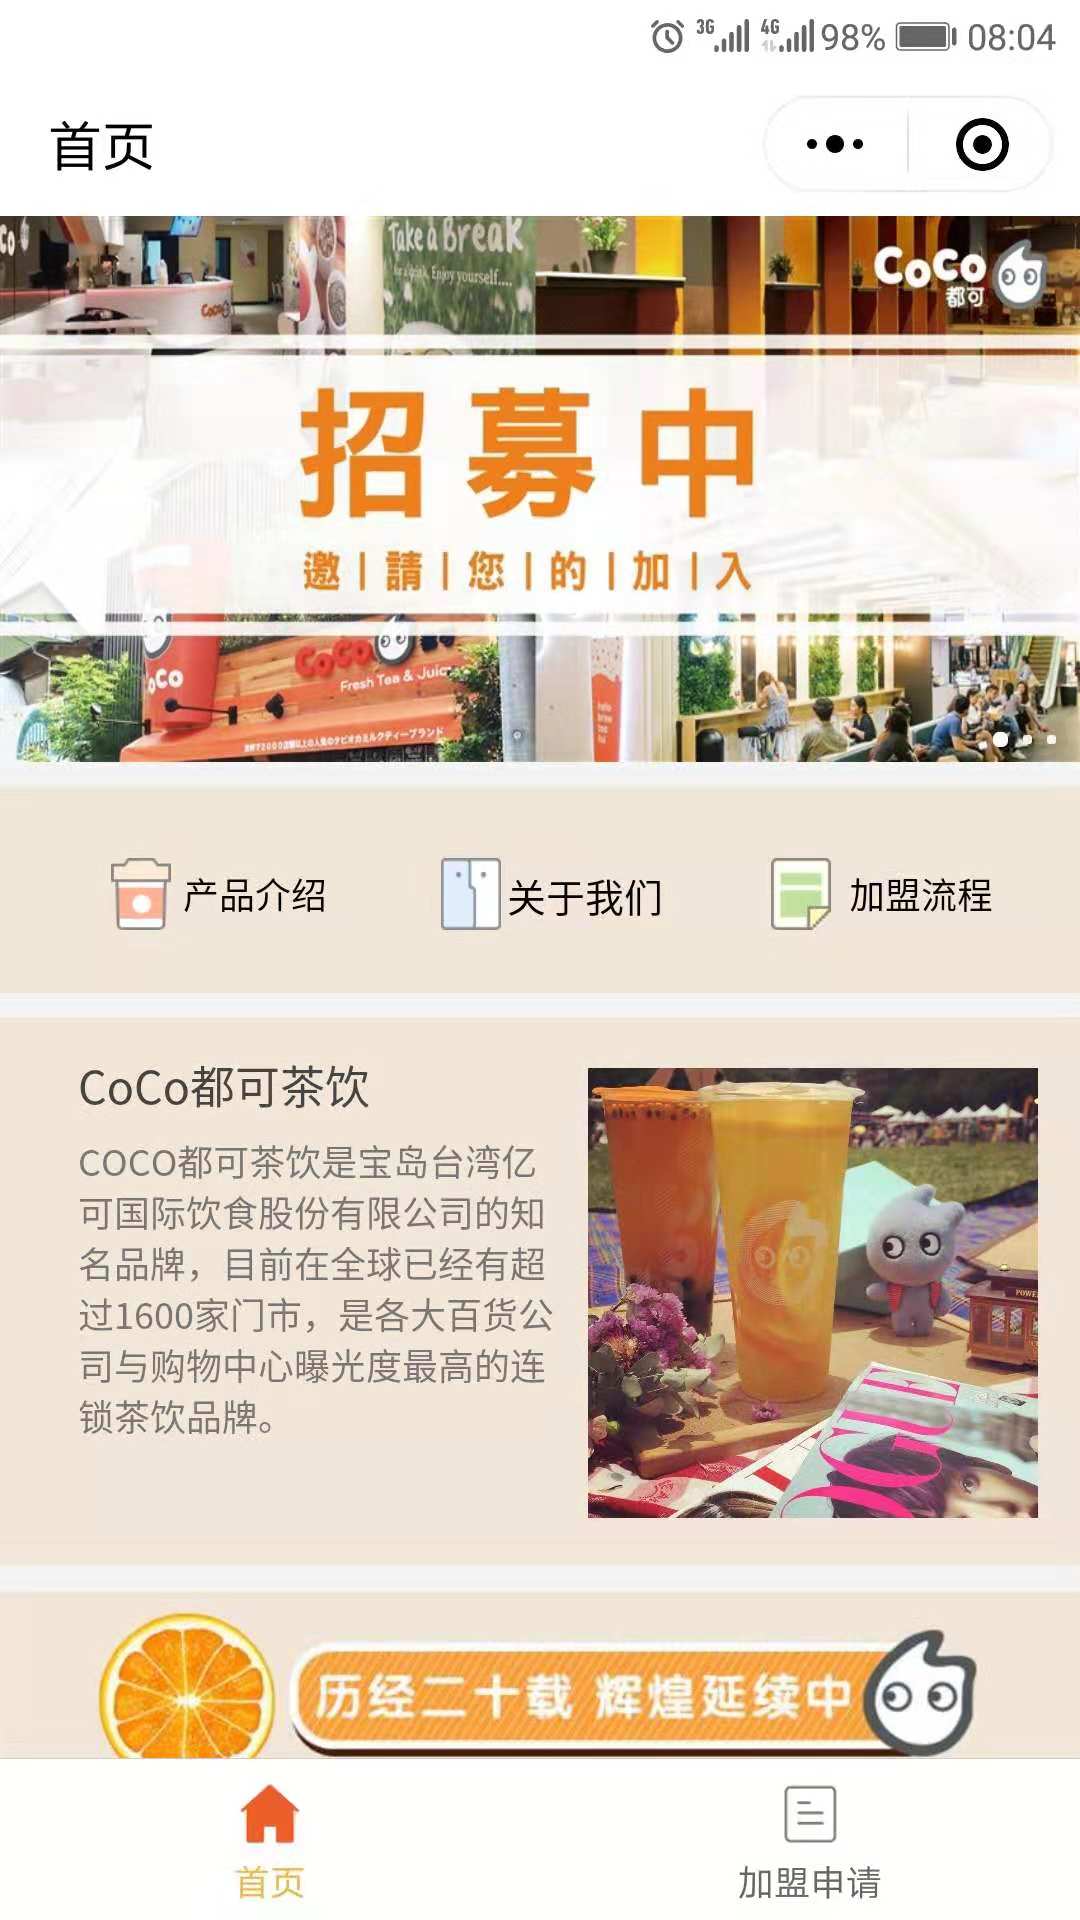 CoCo加盟招商中心